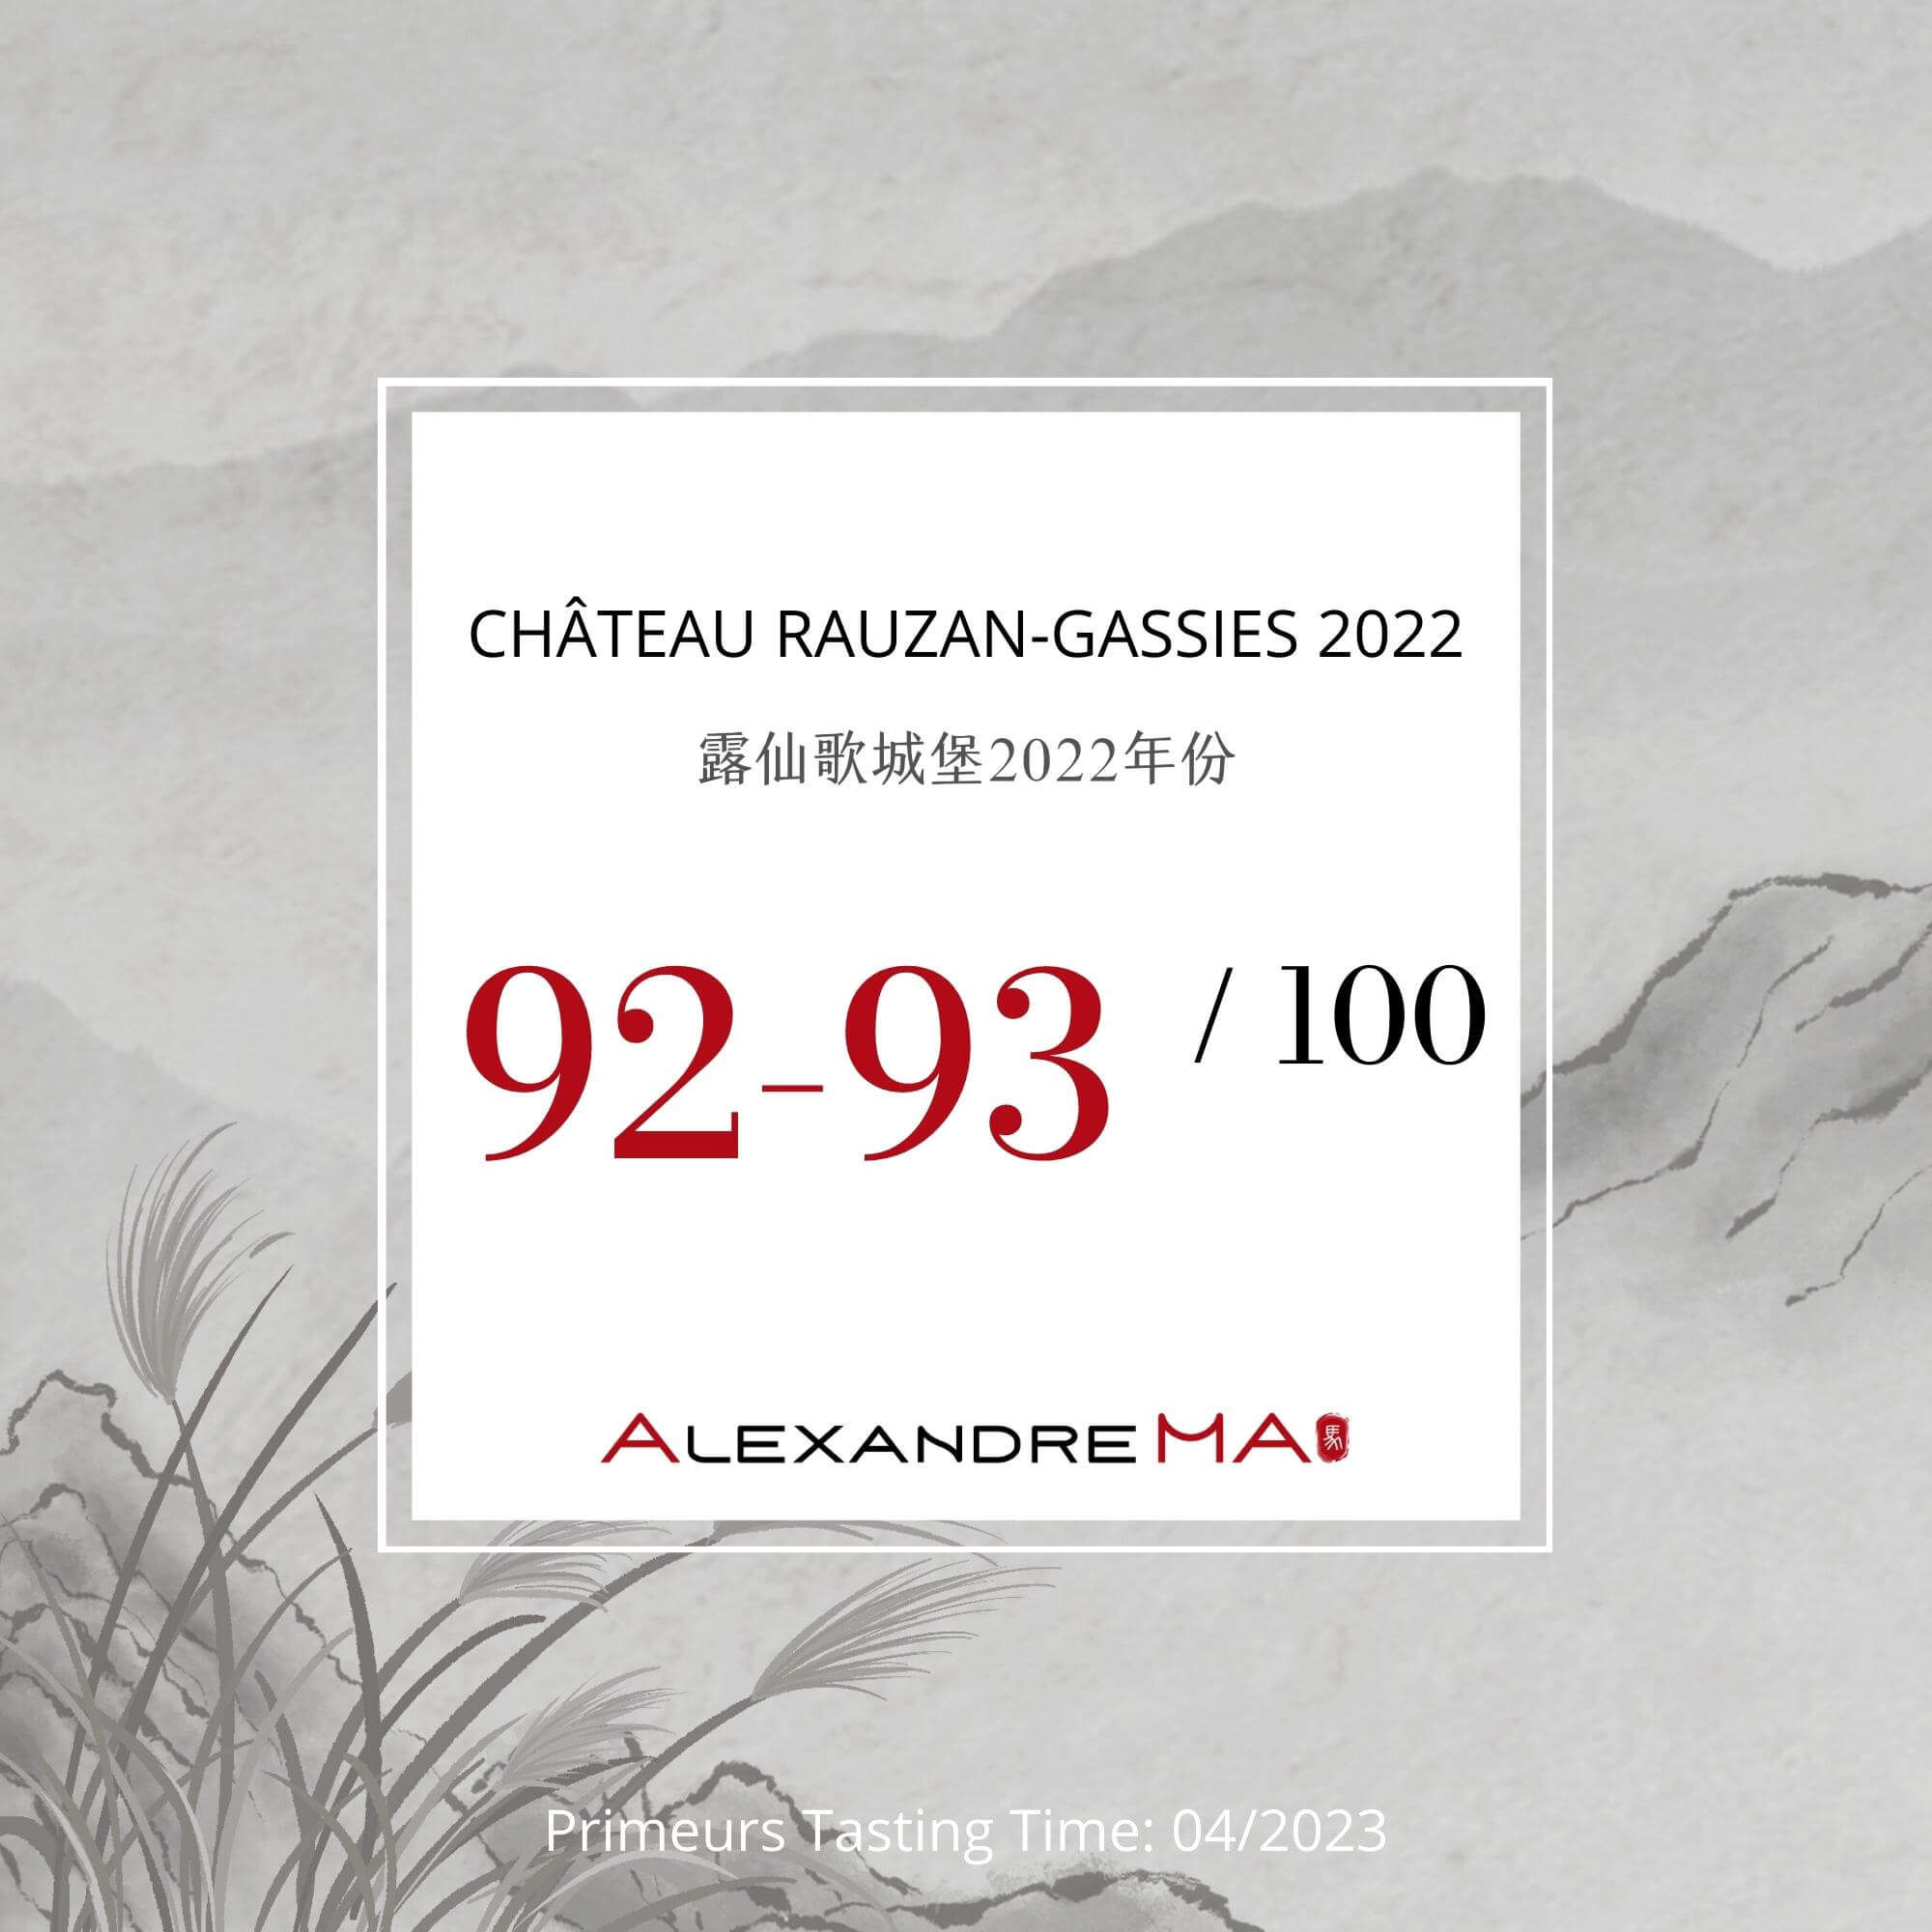 Château Rauzan-Gassies 2022 Primeurs 露仙歌城堡 - Alexandre Ma